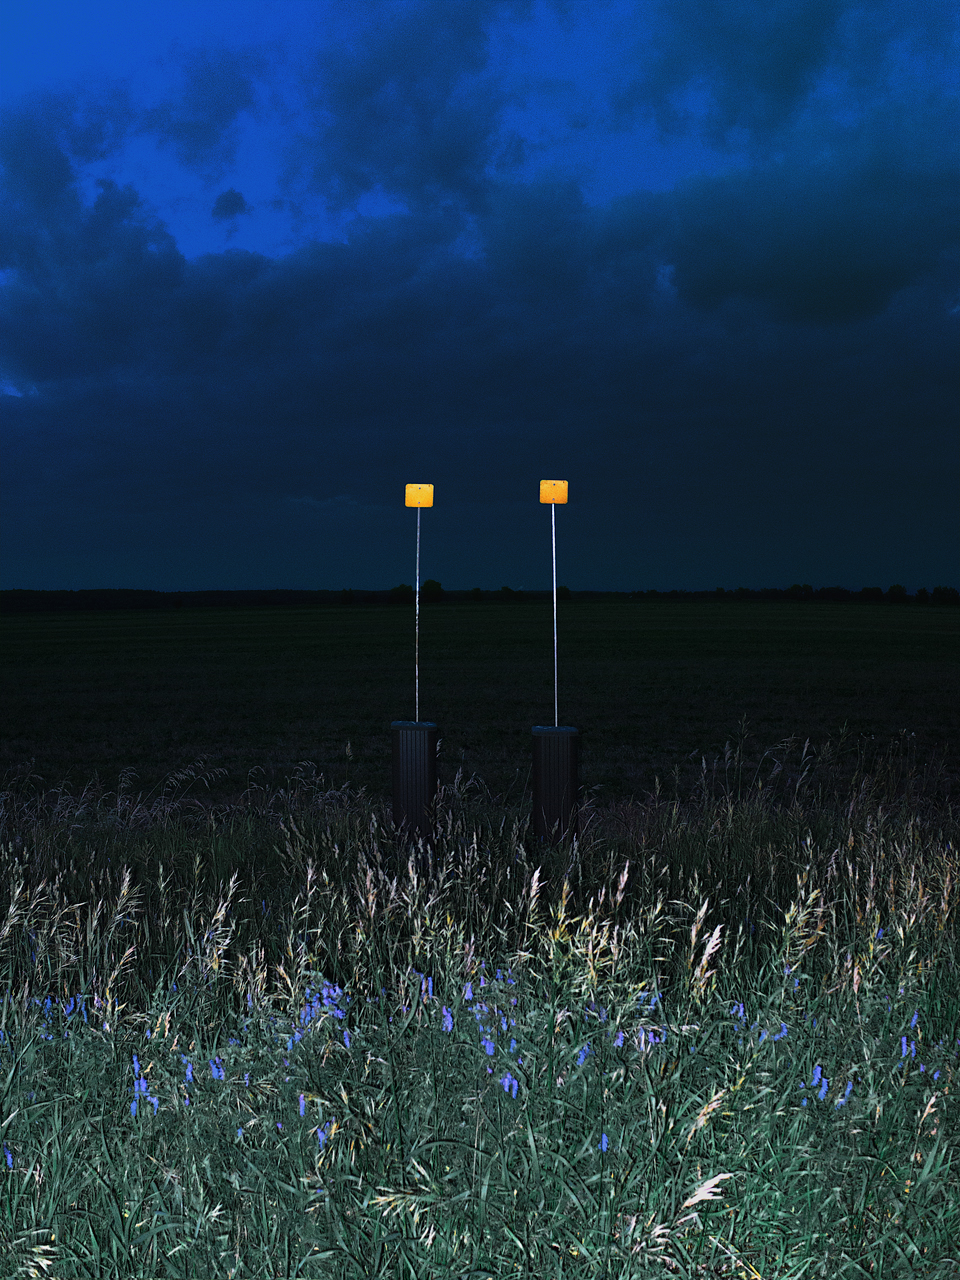 Visions benoit paille night light Landscape KLOPELGAG print art FINEART CompactCamera ricohgr2